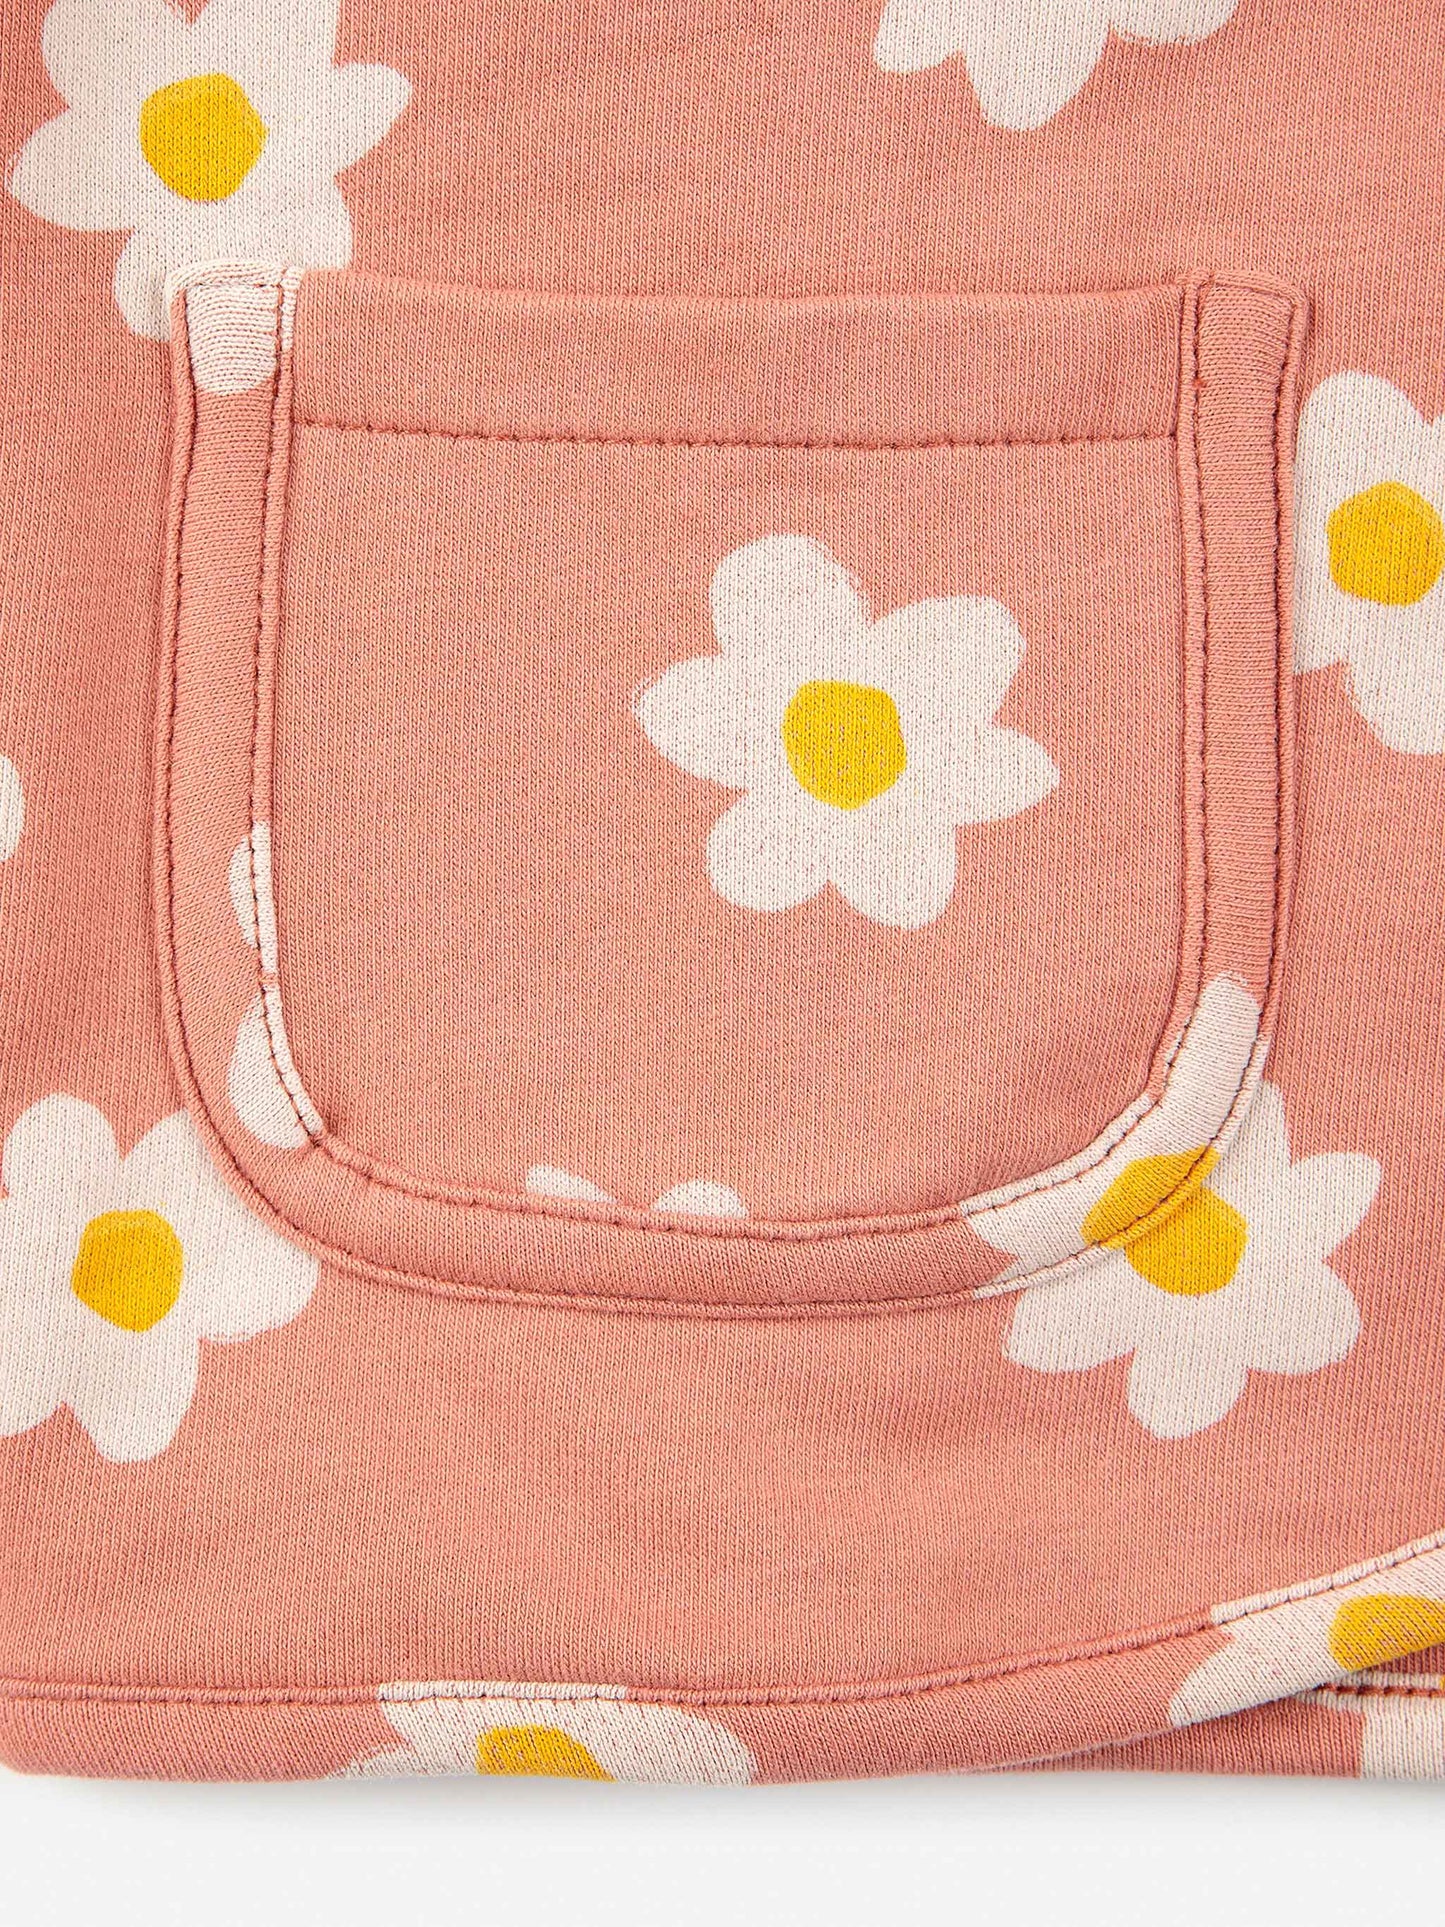 Baby Little Flower buttonned sweatshirt